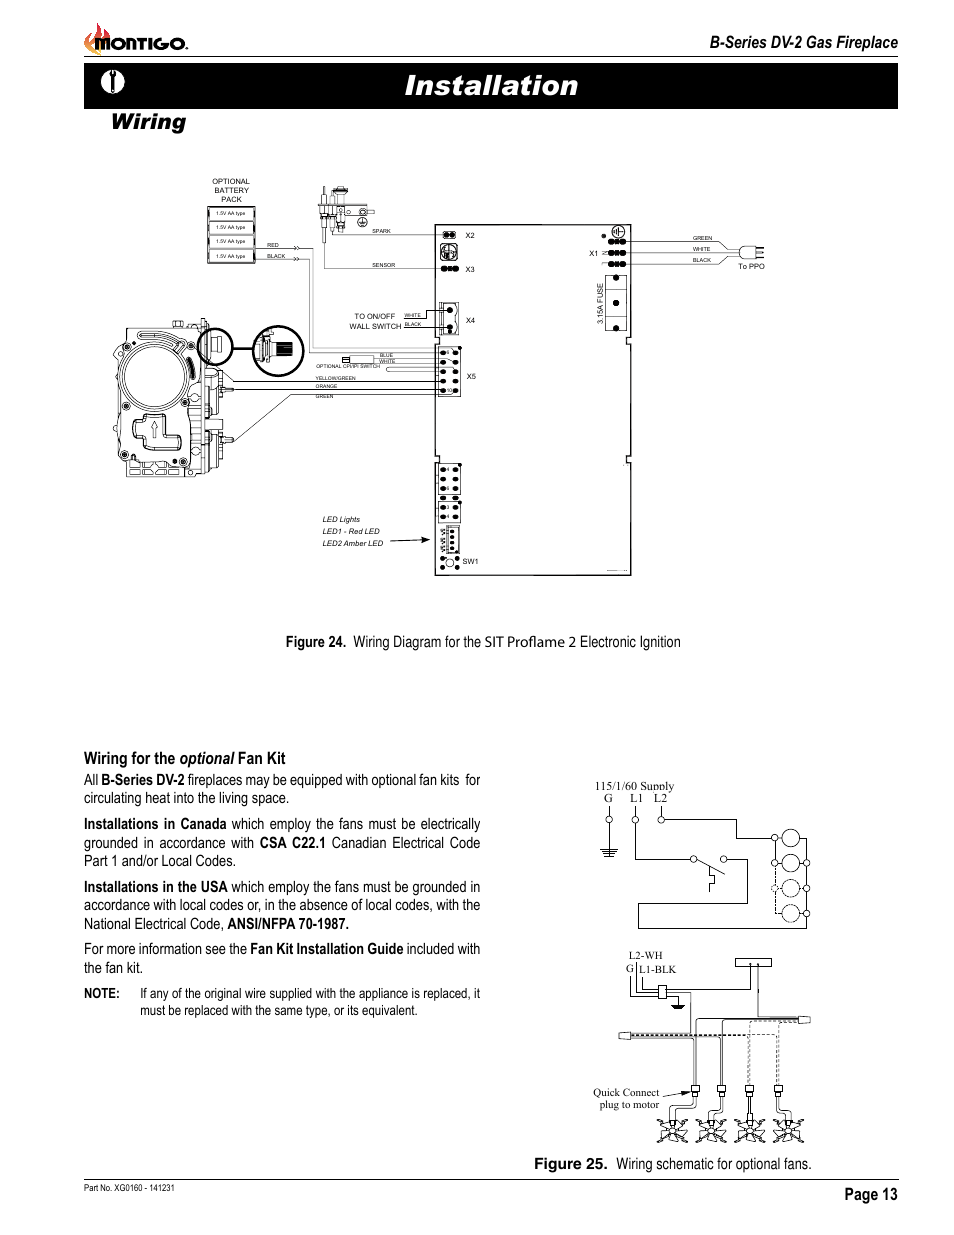 Installation, Wiring, Page 13 b-series dv-2 gas fireplace | Wiring for the optional fan kit | Montigo B34DV User Manual | Page 13 / 26